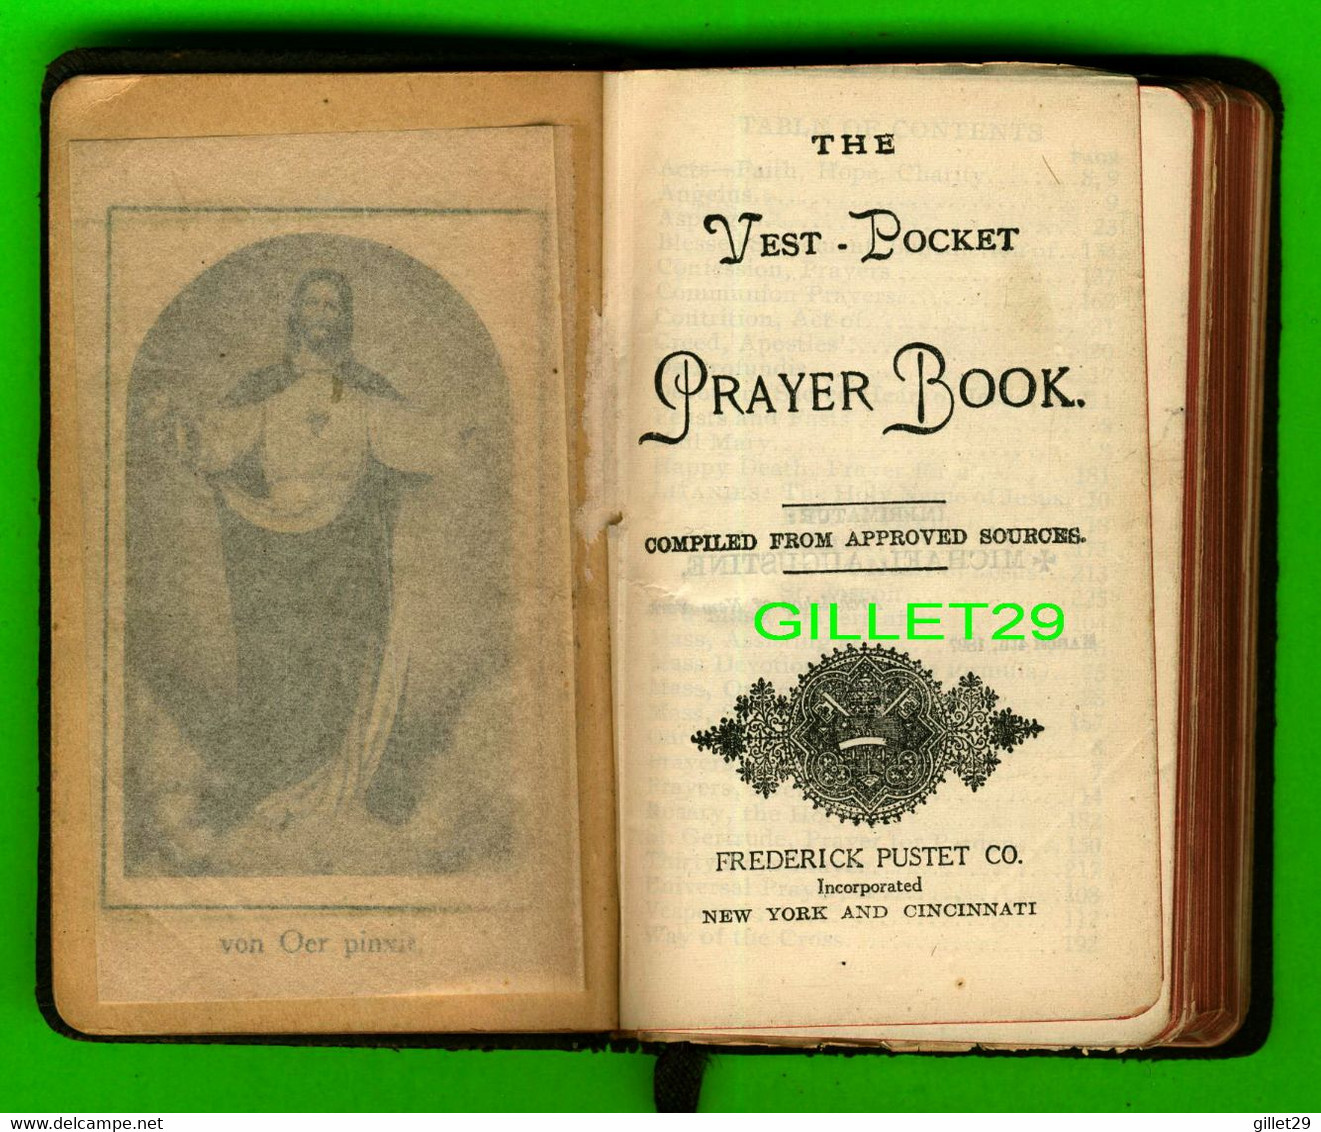 LIVRE, RELIGION, MISSEL - THE VEST-POCKET PRAYER BOOK, 1897 - 184 PAGES - LEATHER BINDING - IMP. MICHAEL AUGUSTINE - - 1850-1899